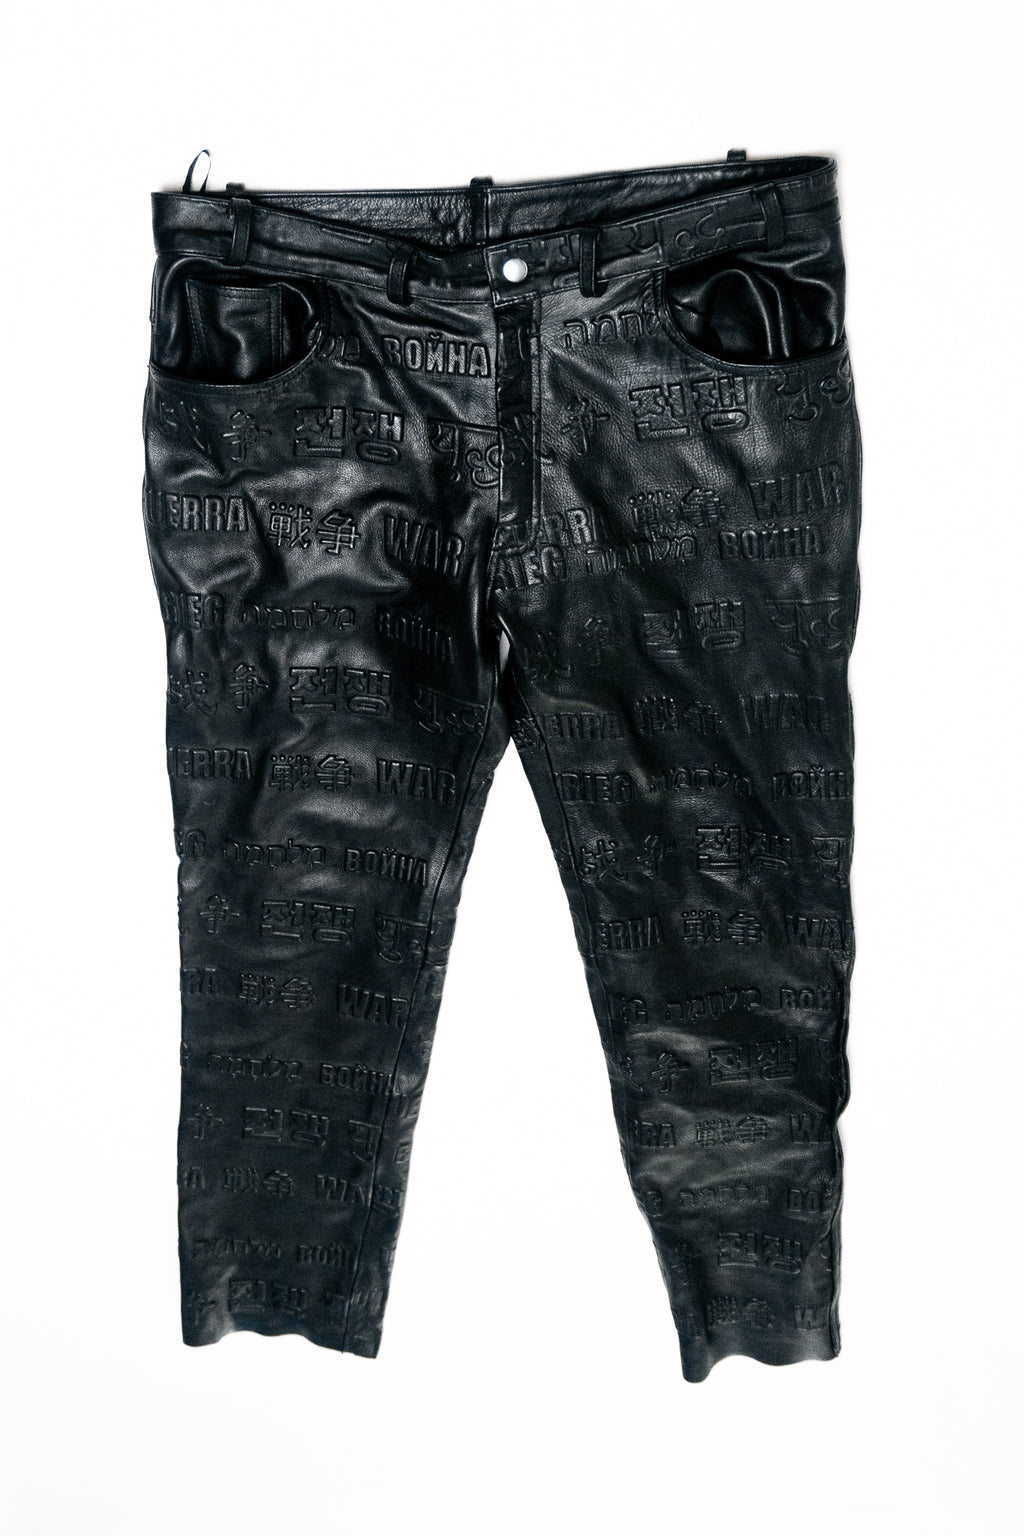 SociEx War Leather Pants (3 COLORS)